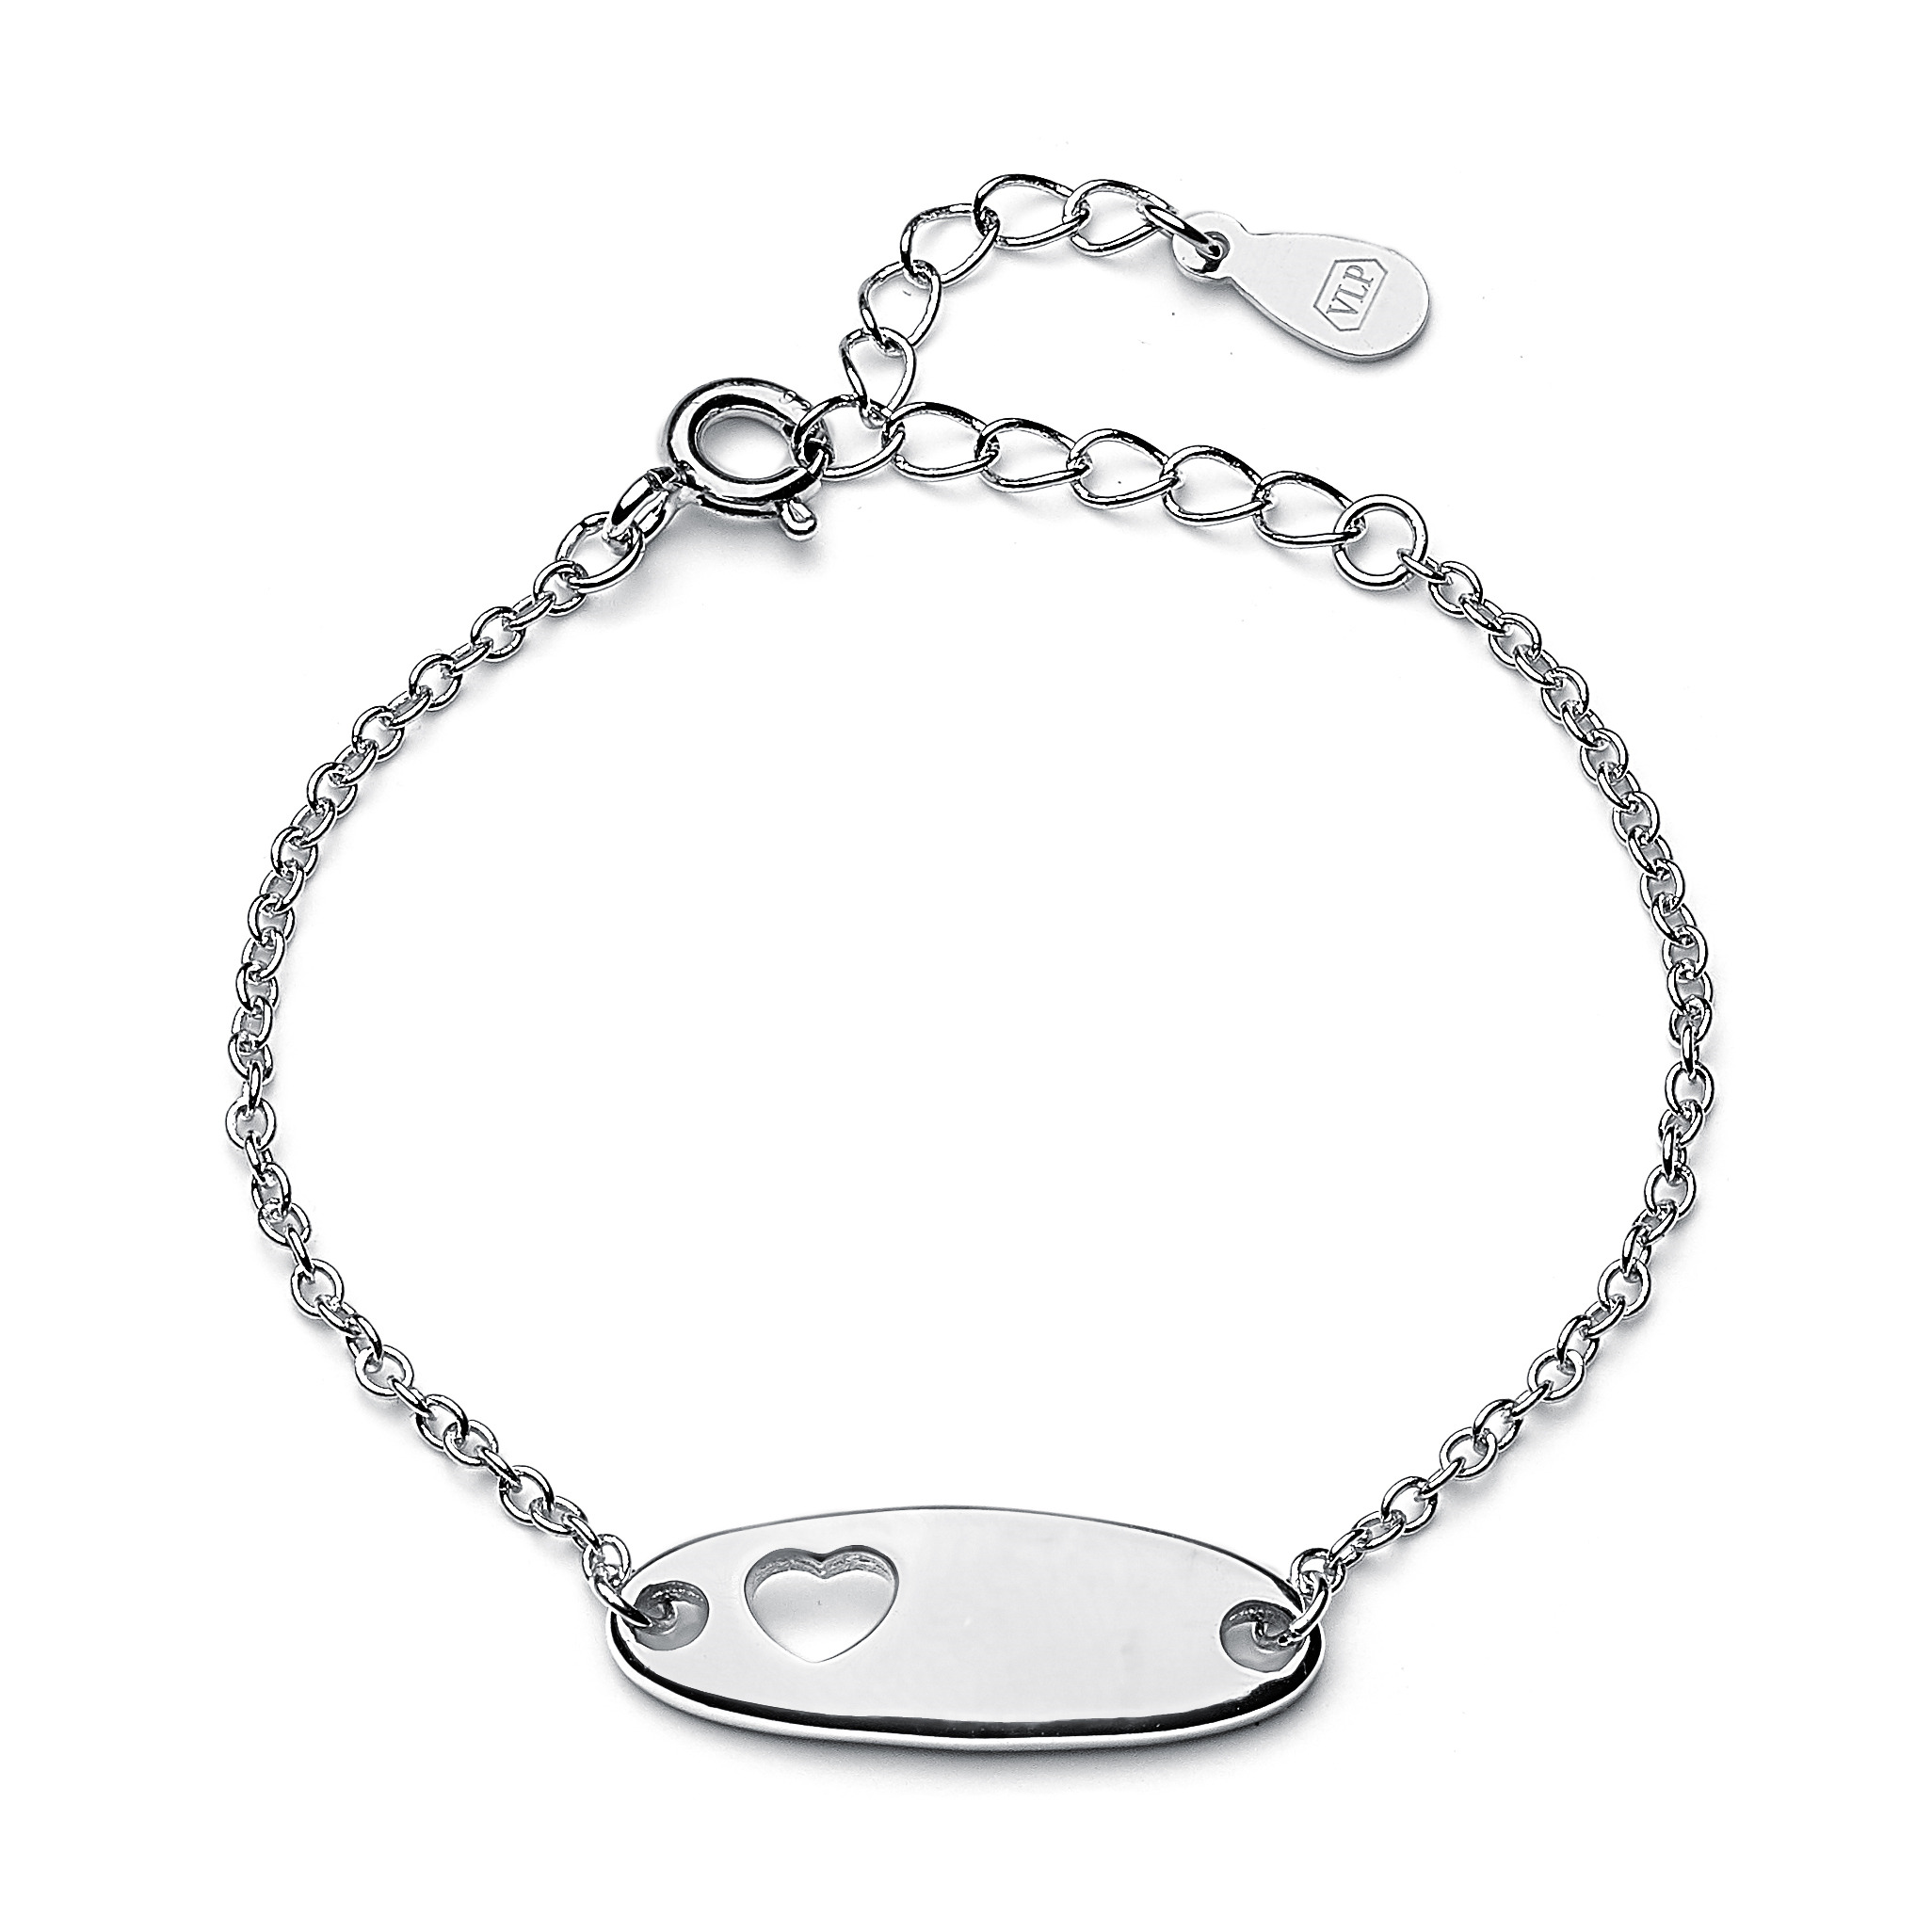 Šperky4U Dětský stříbrný náramek s destičkou, možnost rytiny, délka 12+3 cm Rytina: S rytinou